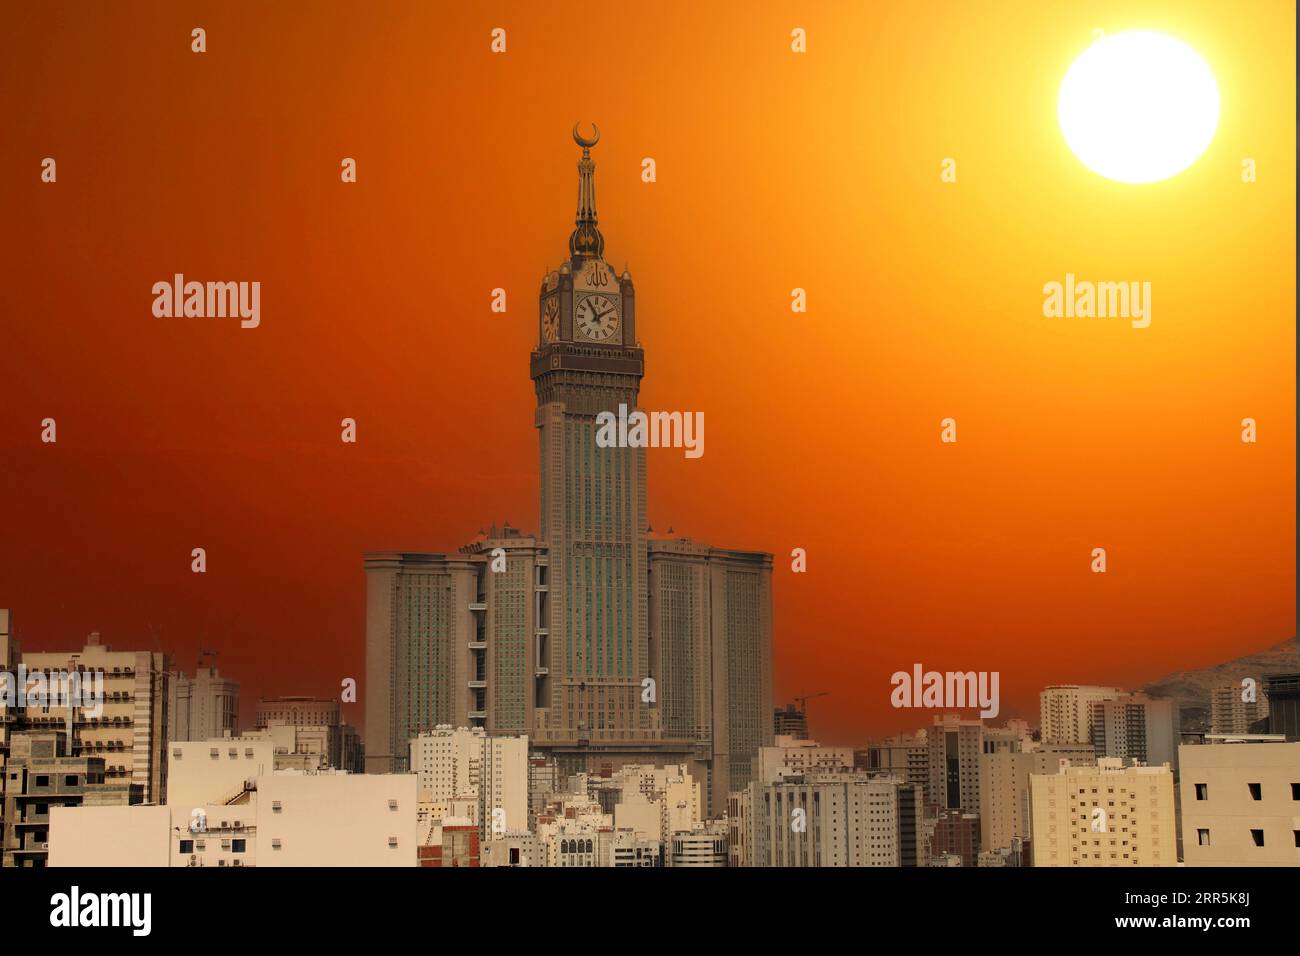 Royal Clock Tower with sunset. Mecca,Saudi Arabia. Stock Photo